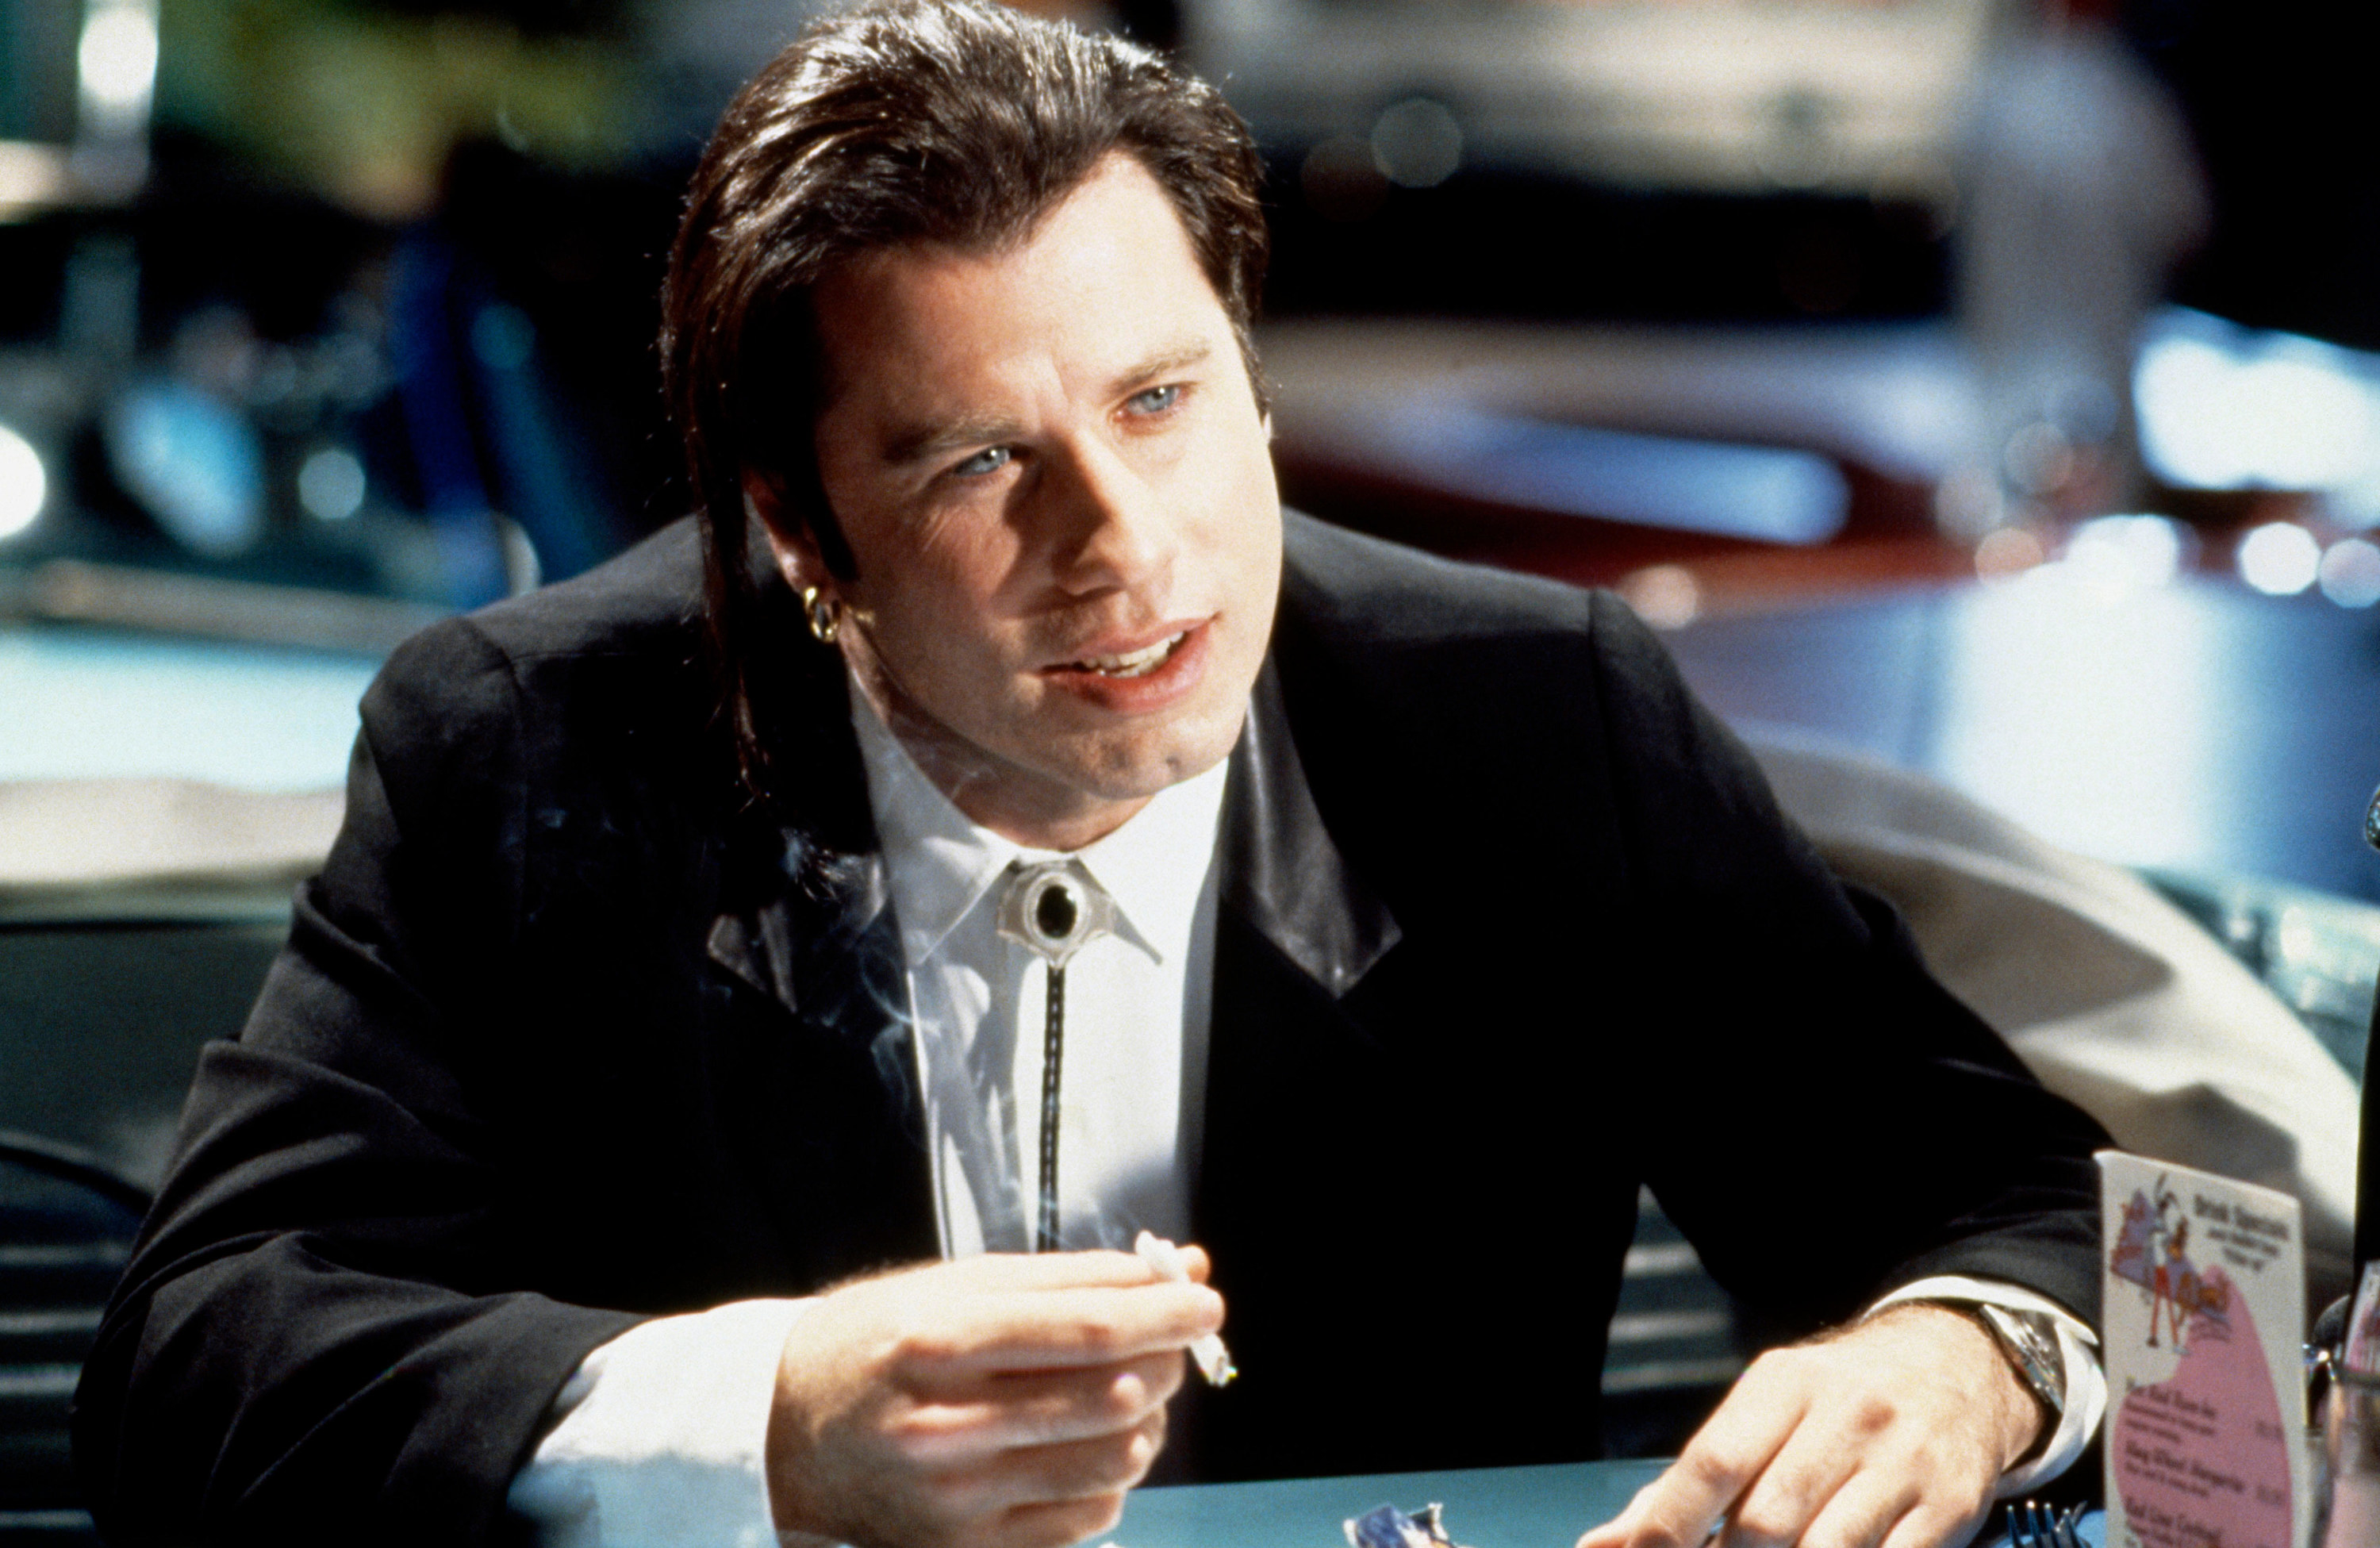 John Travolta in a black suit and bolo tie smokes a cigarette at a theme restaurant